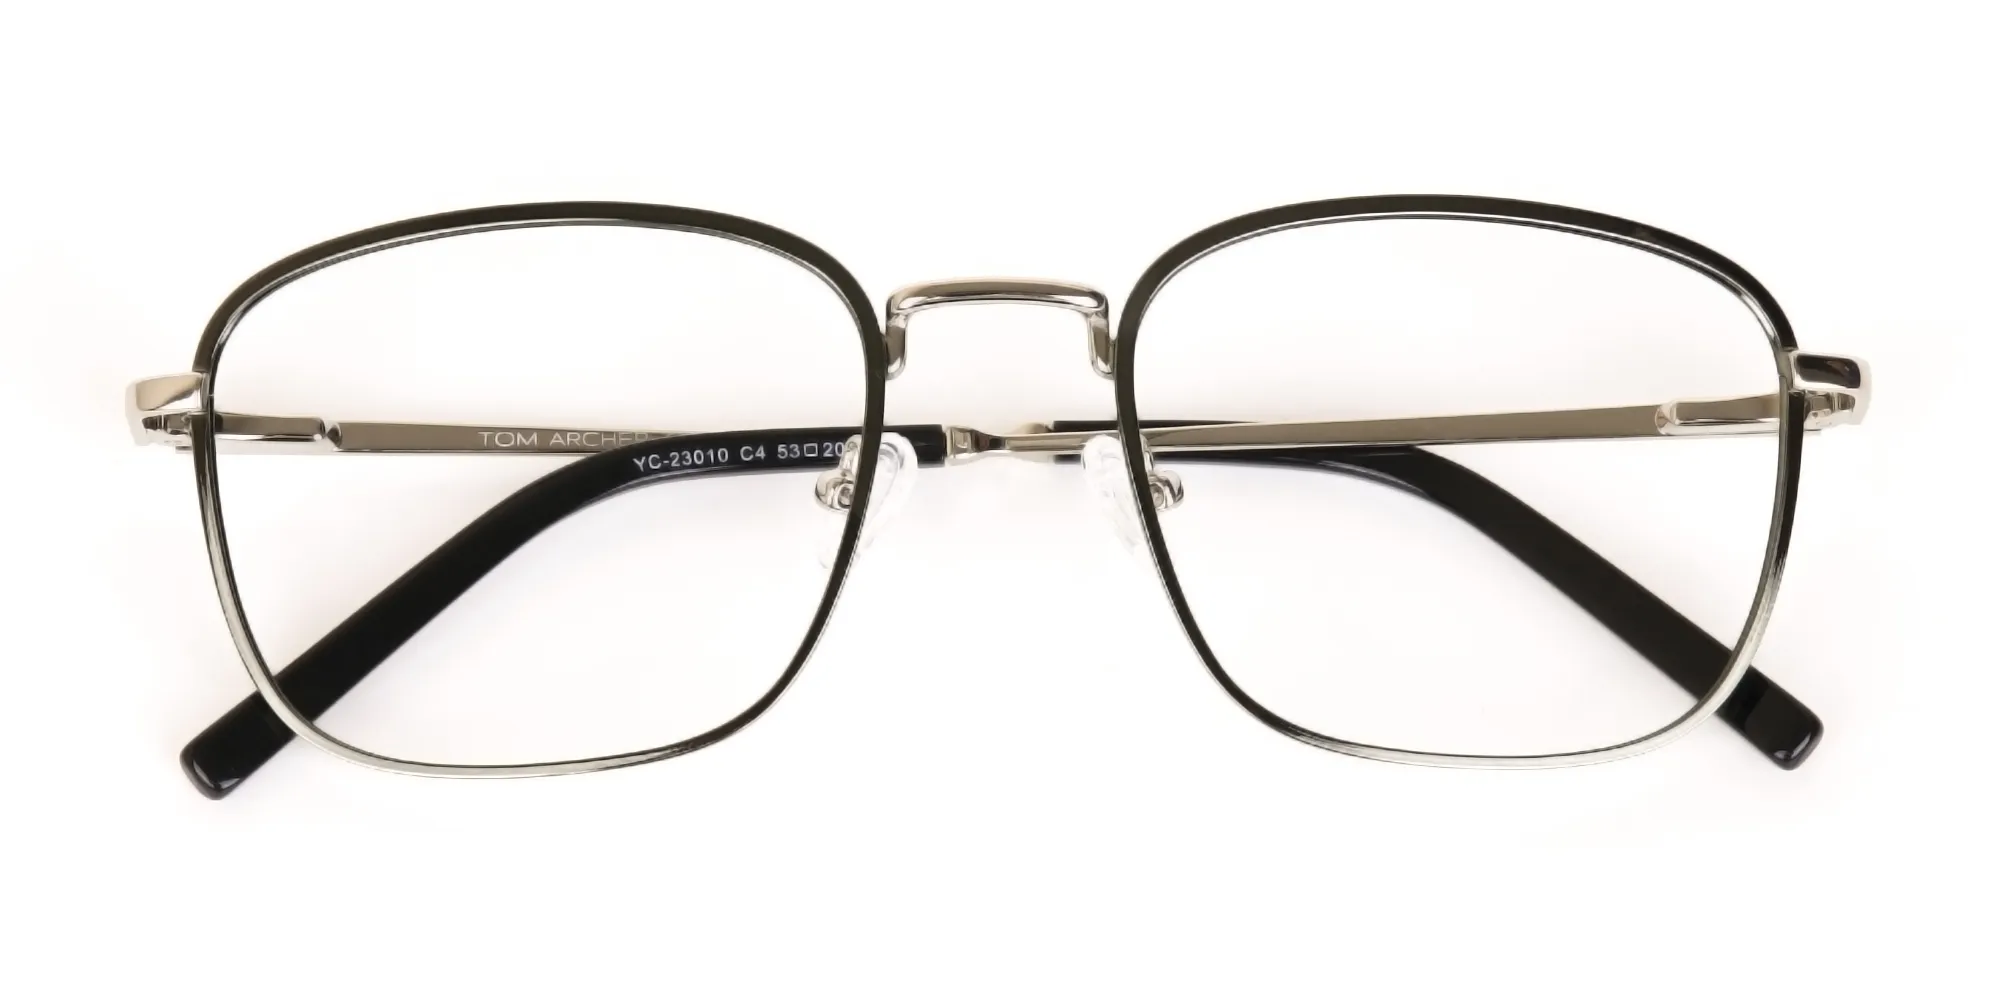 Silver Green Metal Square Glasses Frame Unisex-1